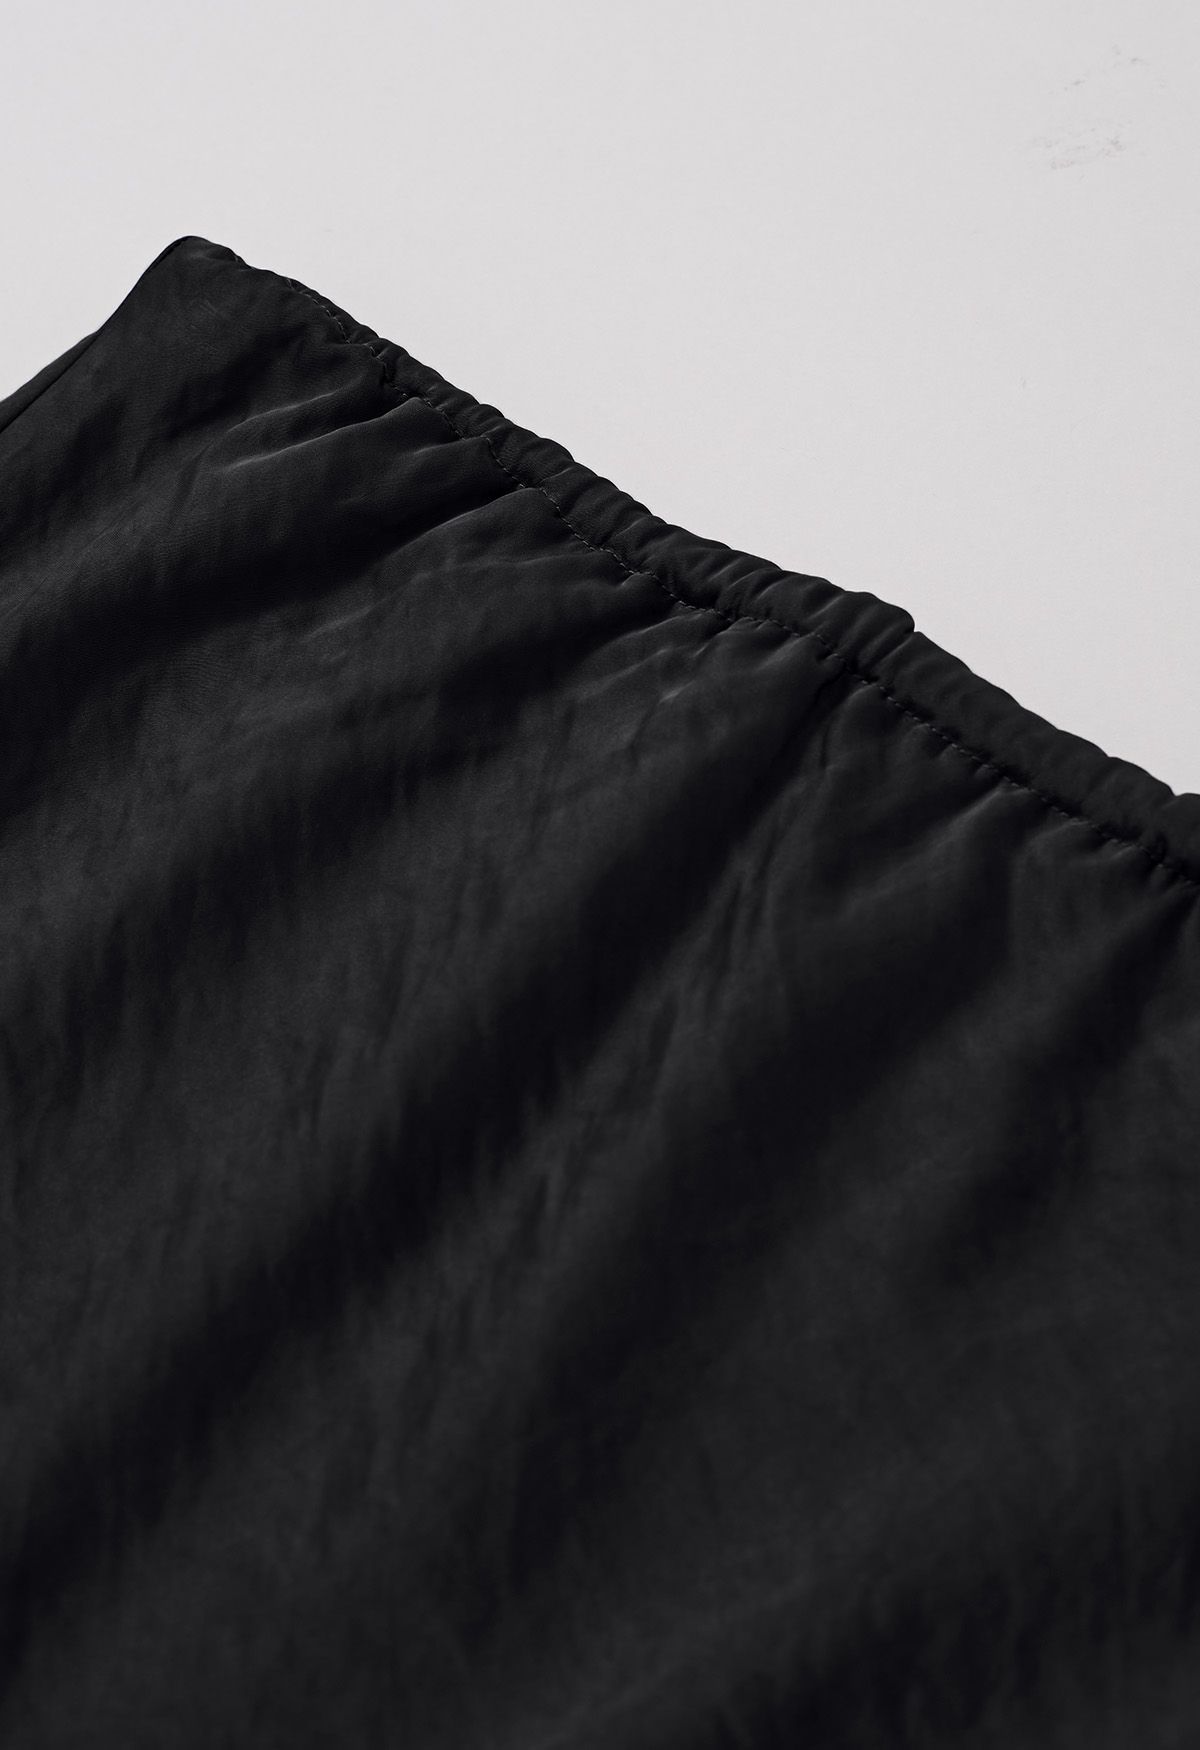 Texture Satin Drawstring Maxi Skirt in Black